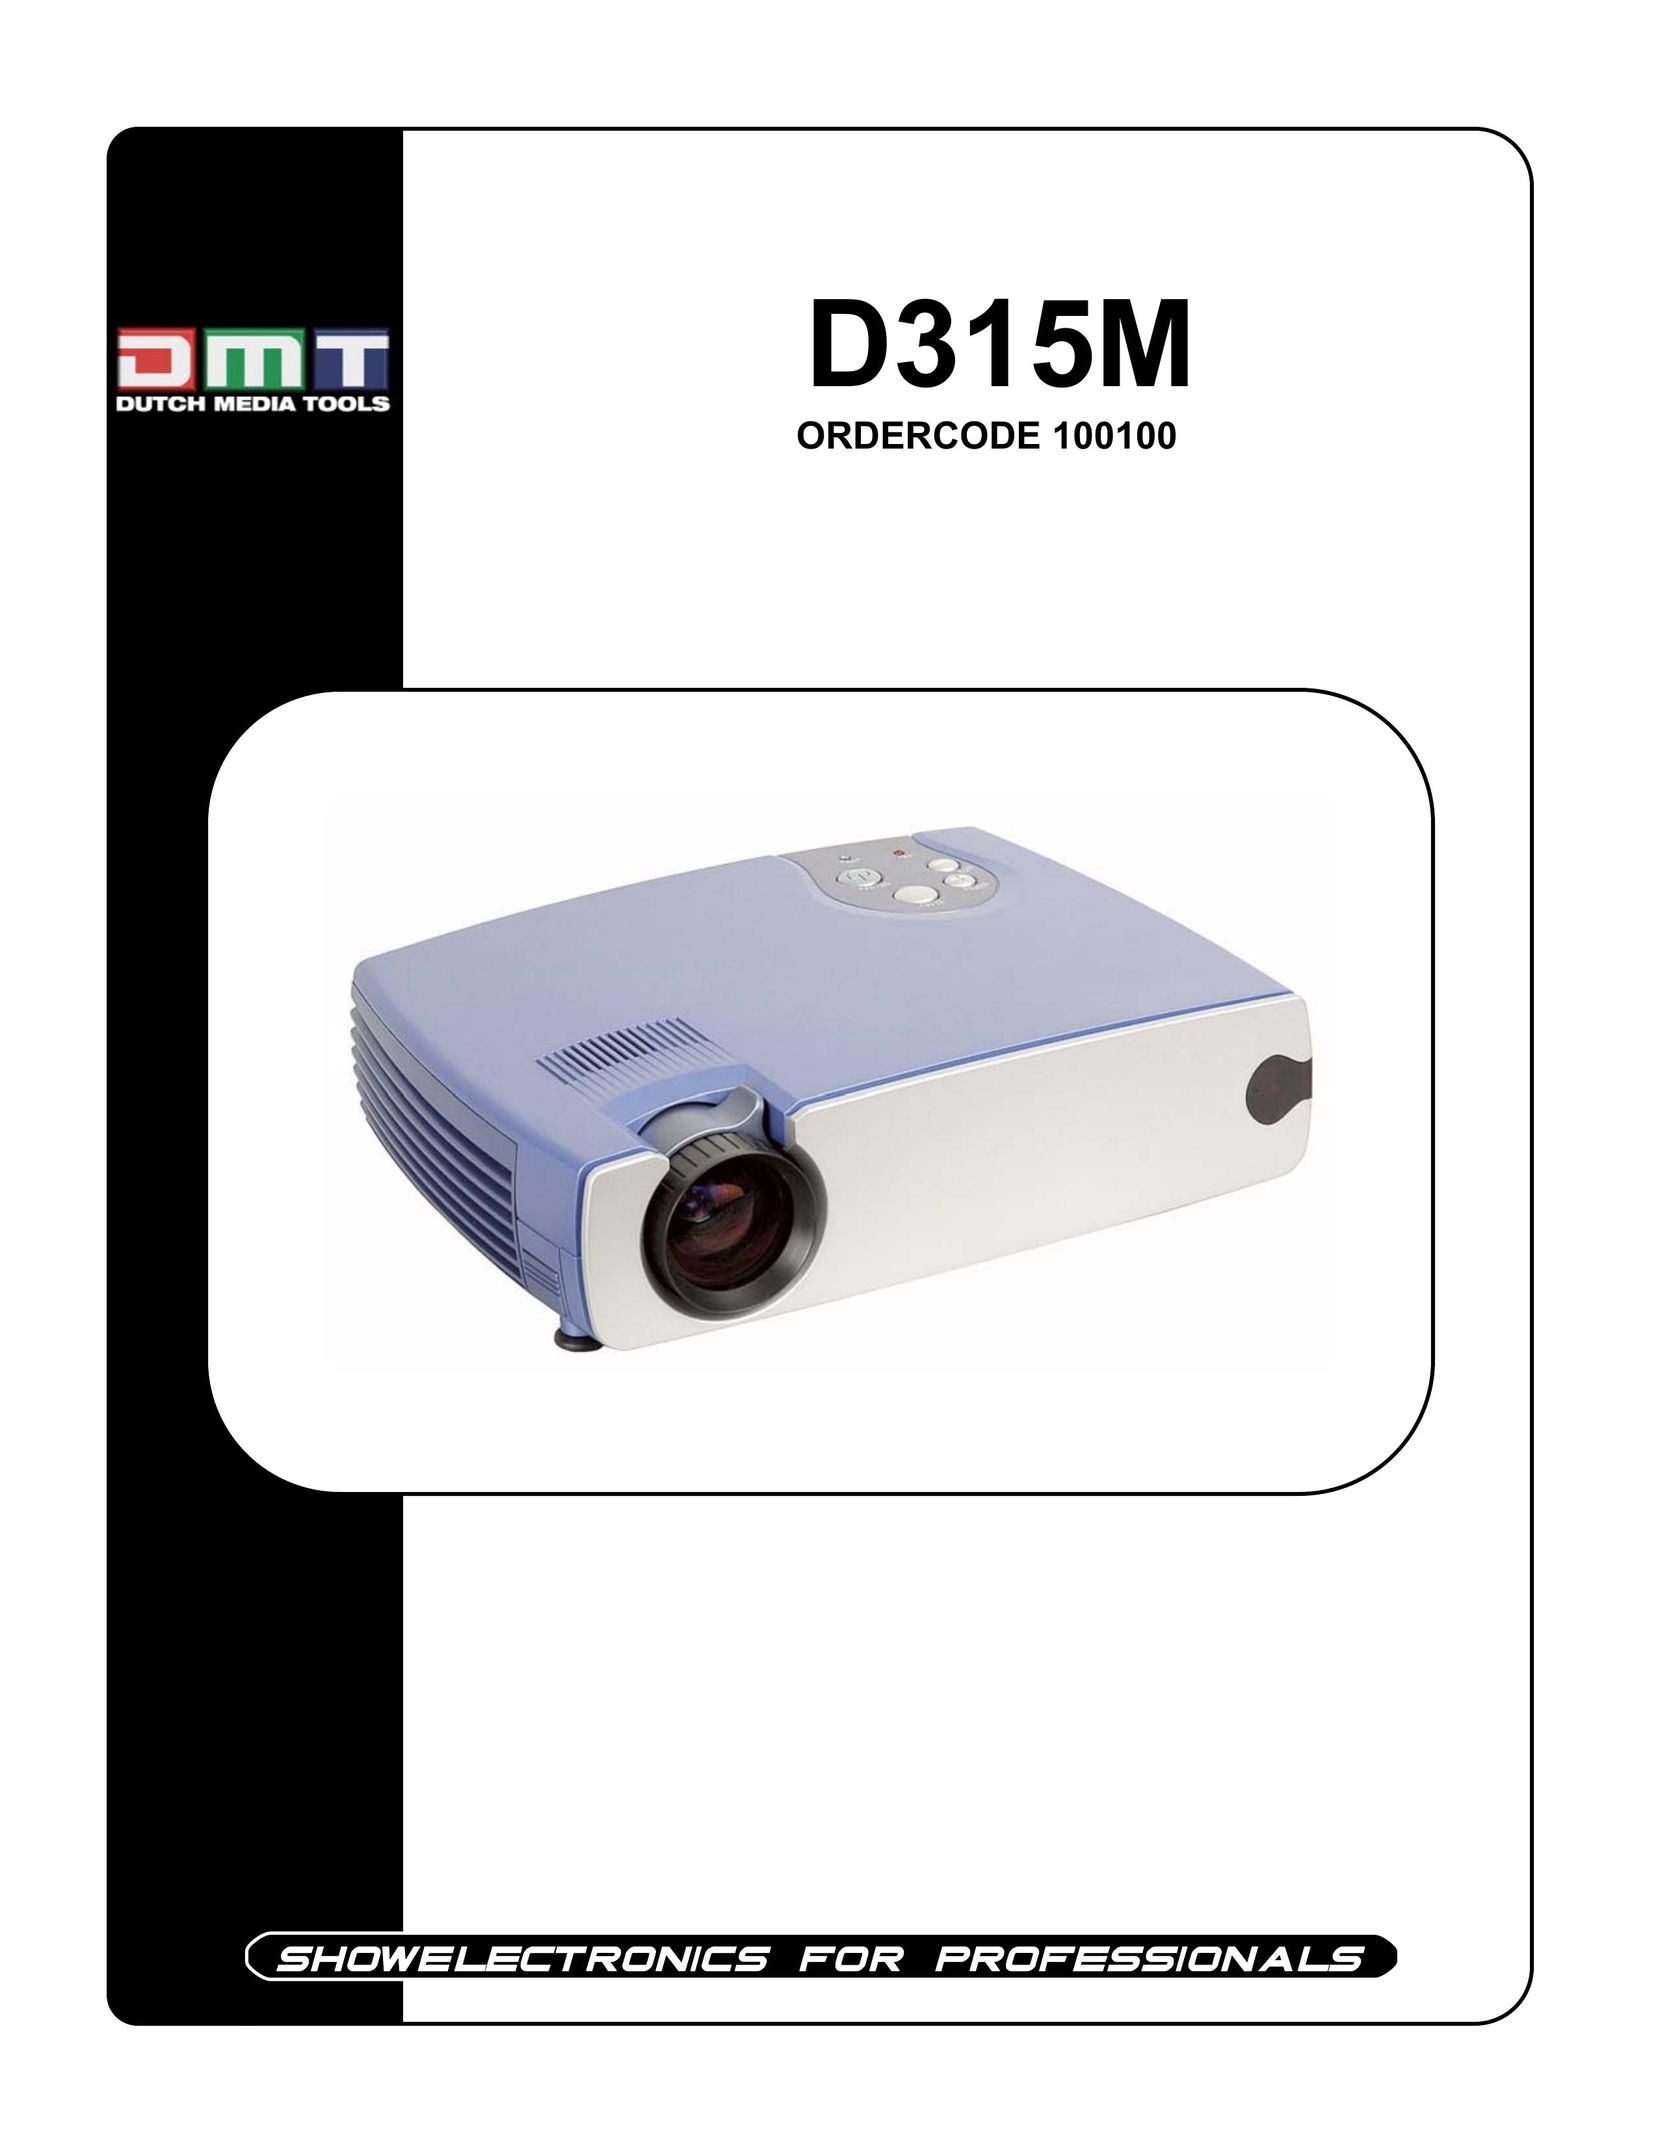 Luxeon D315M Projector User Manual